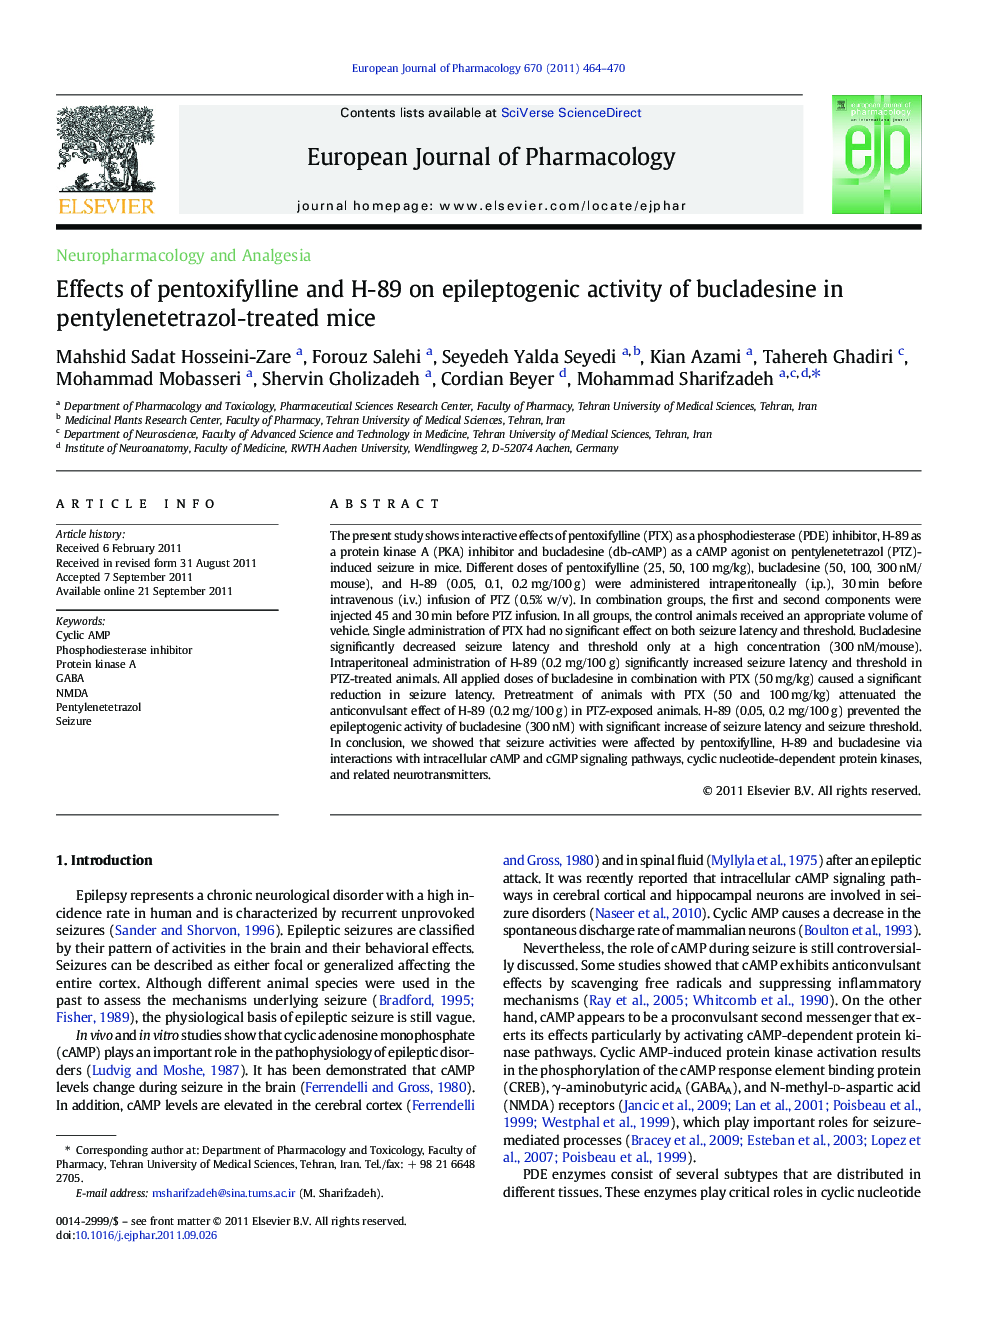 Neuropharmacology and AnalgesiaEffects of pentoxifylline and H-89 on epileptogenic activity of bucladesine in pentylenetetrazol-treated mice